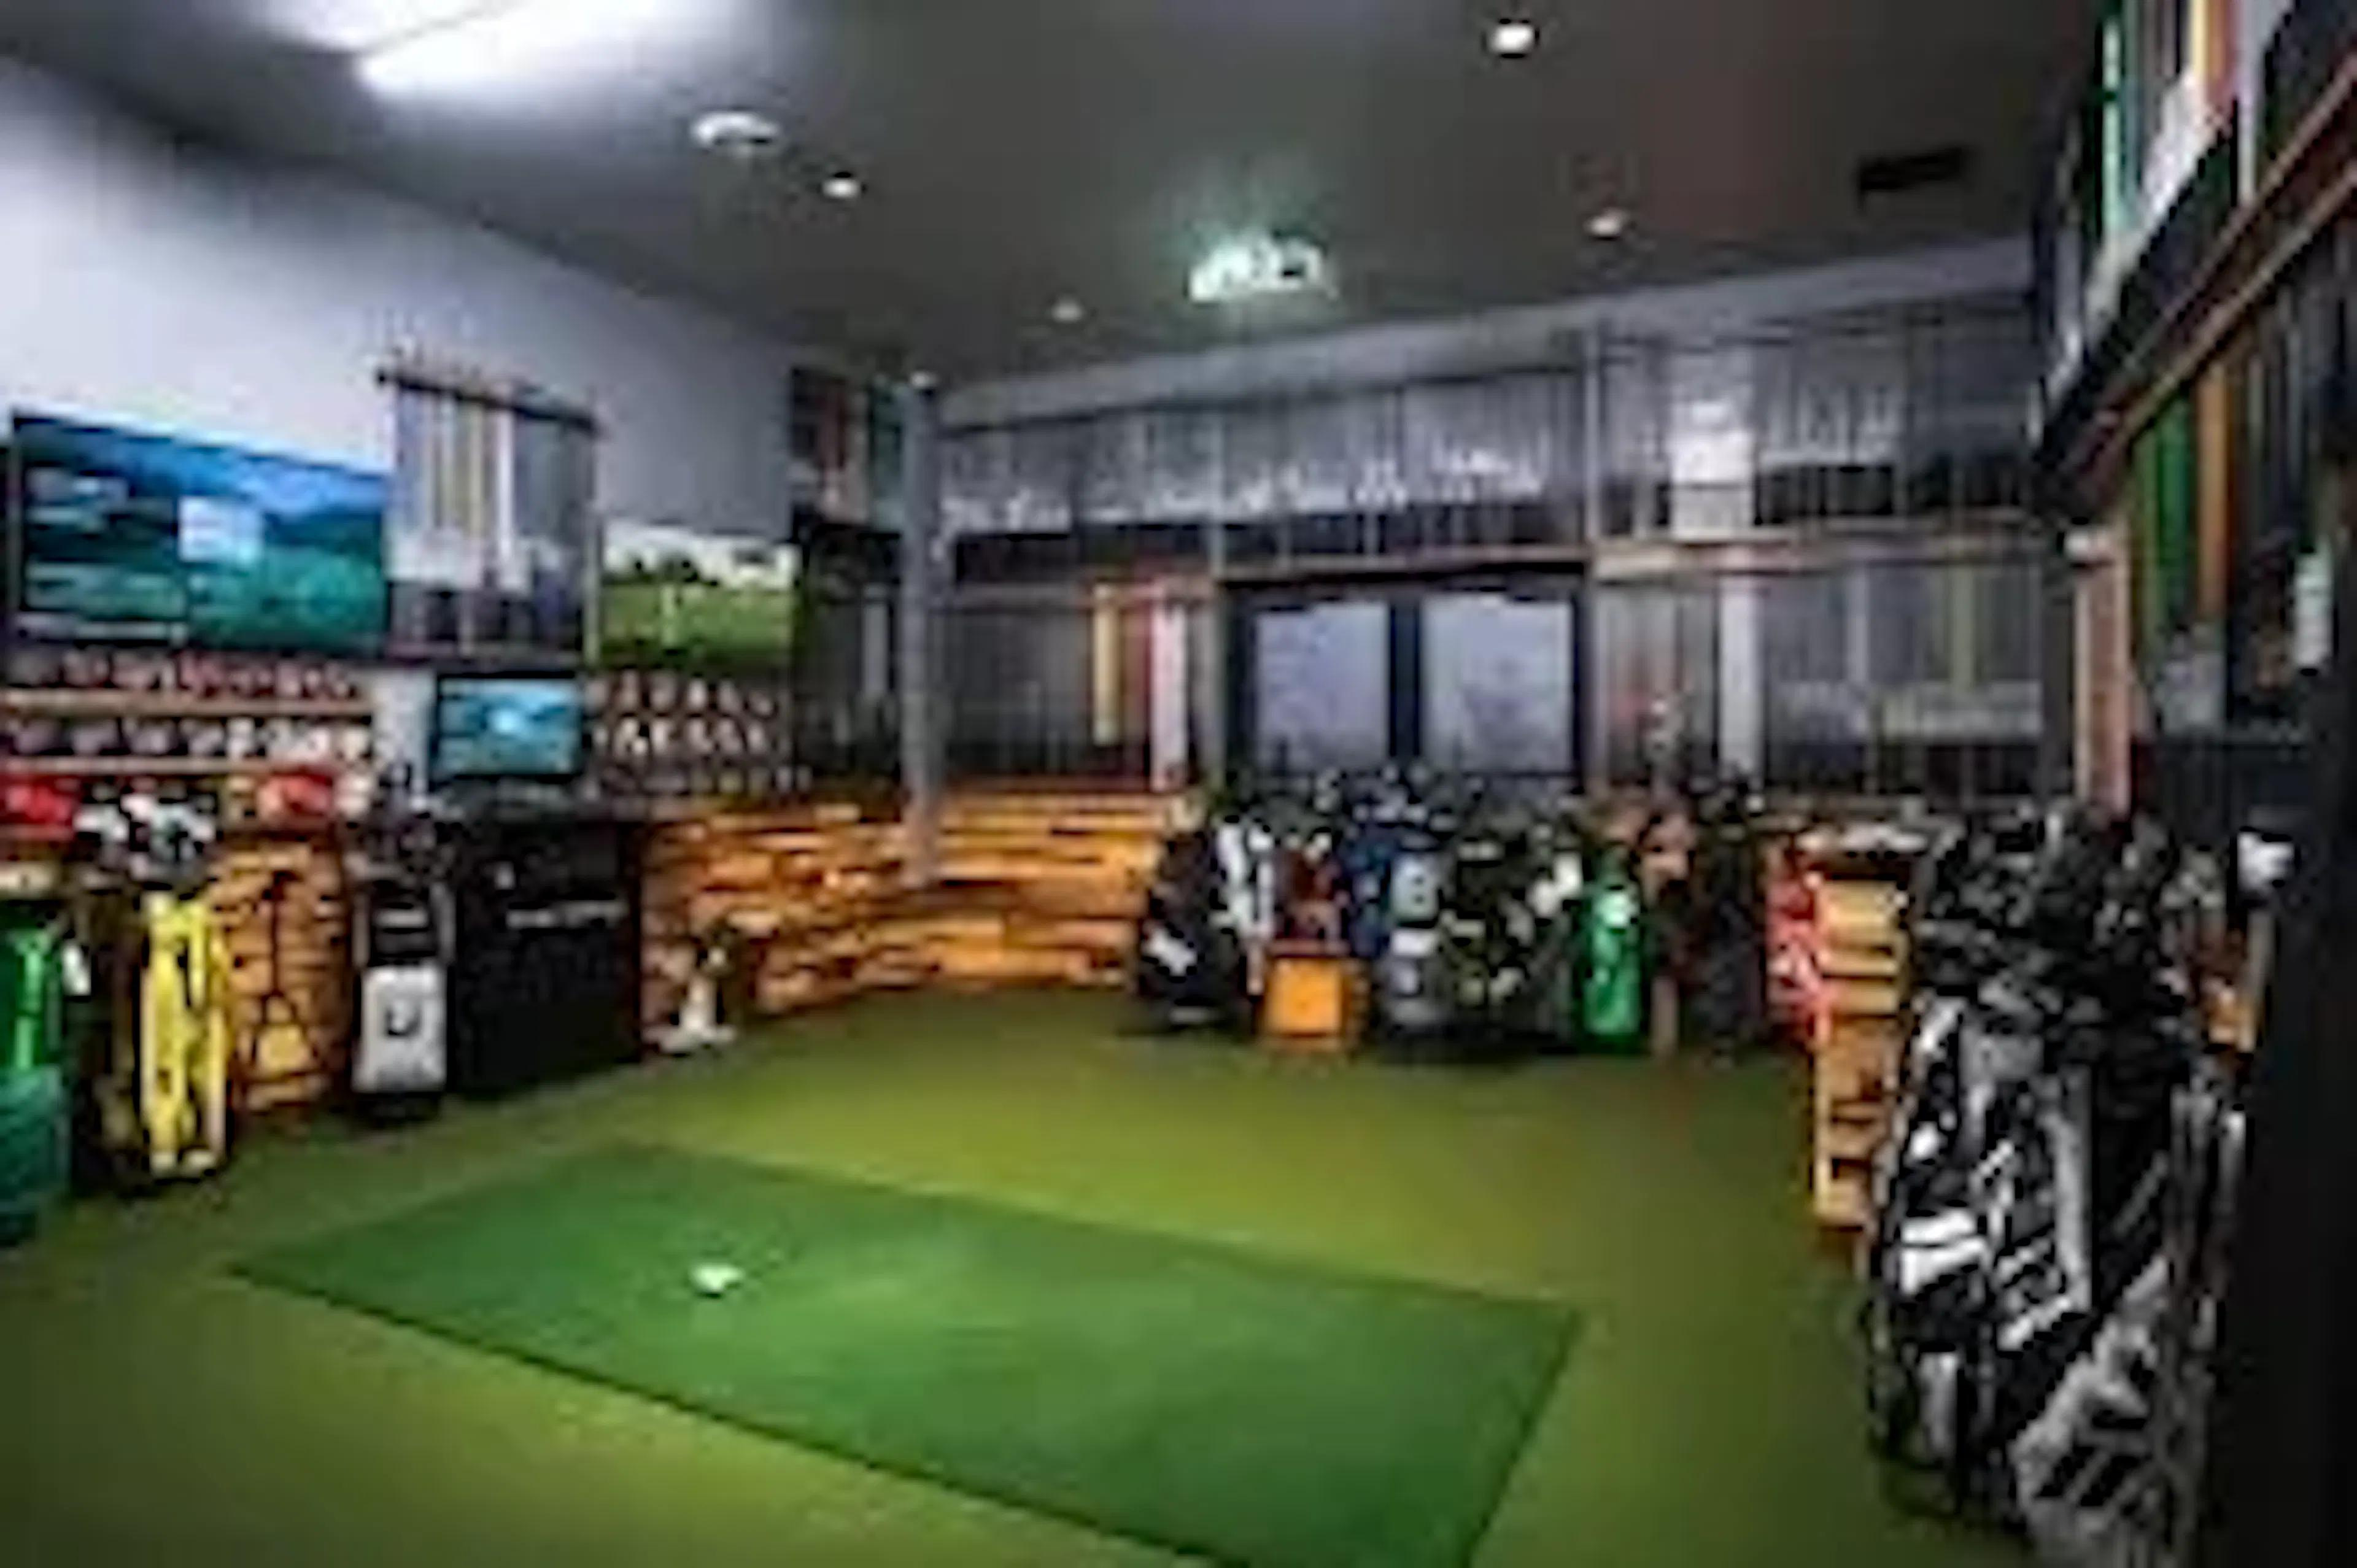 the golf swing studio